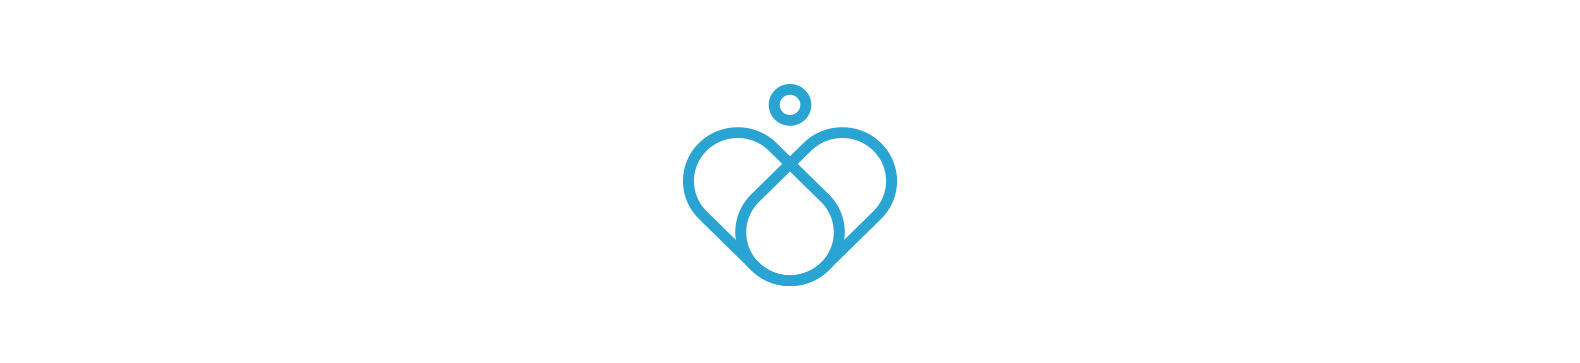 gojanegive logo 2